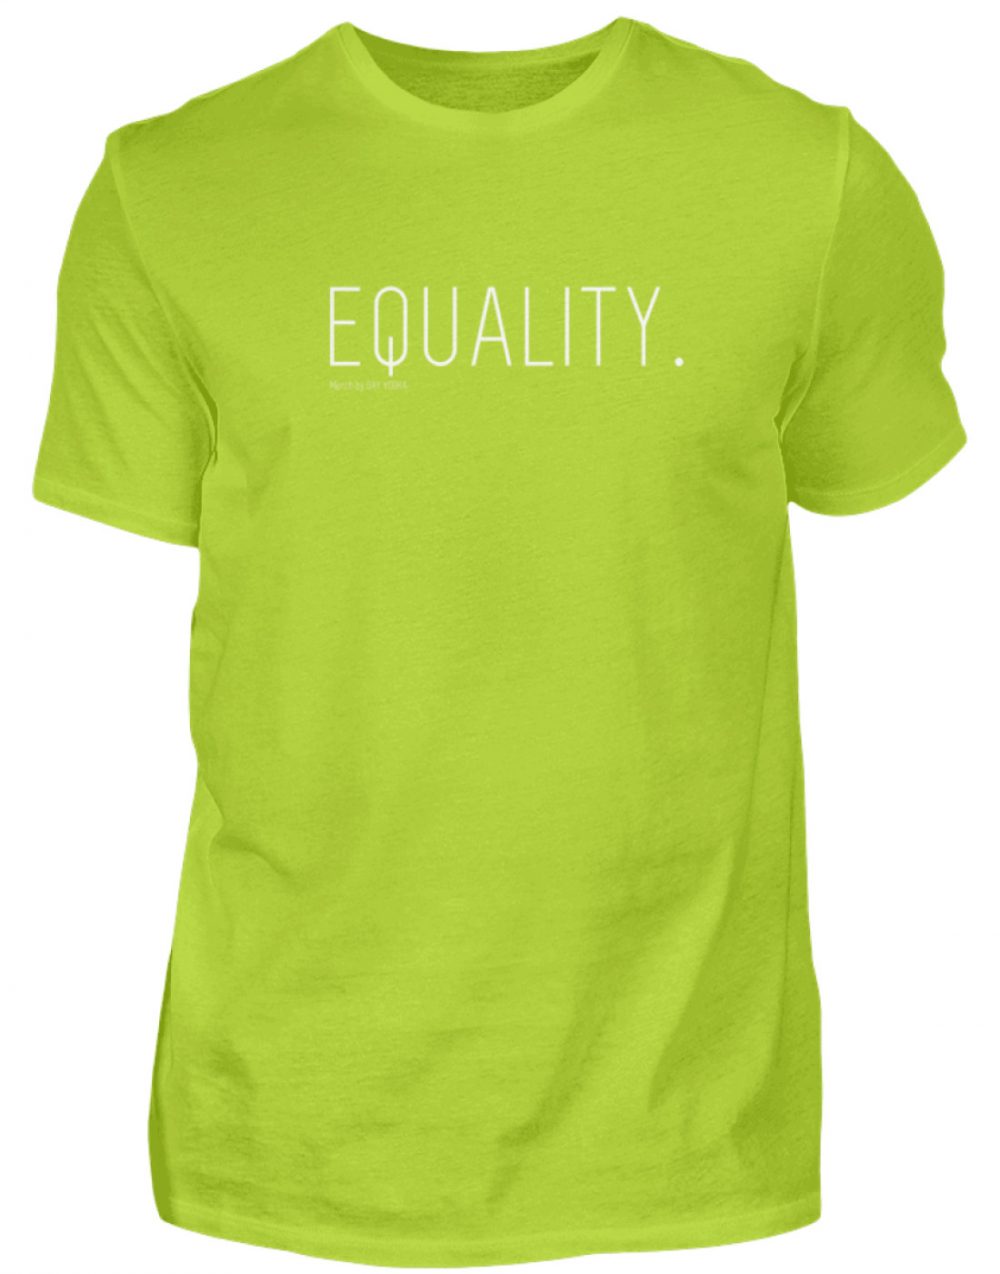 EQUALITY. - Herren Premiumshirt-2885